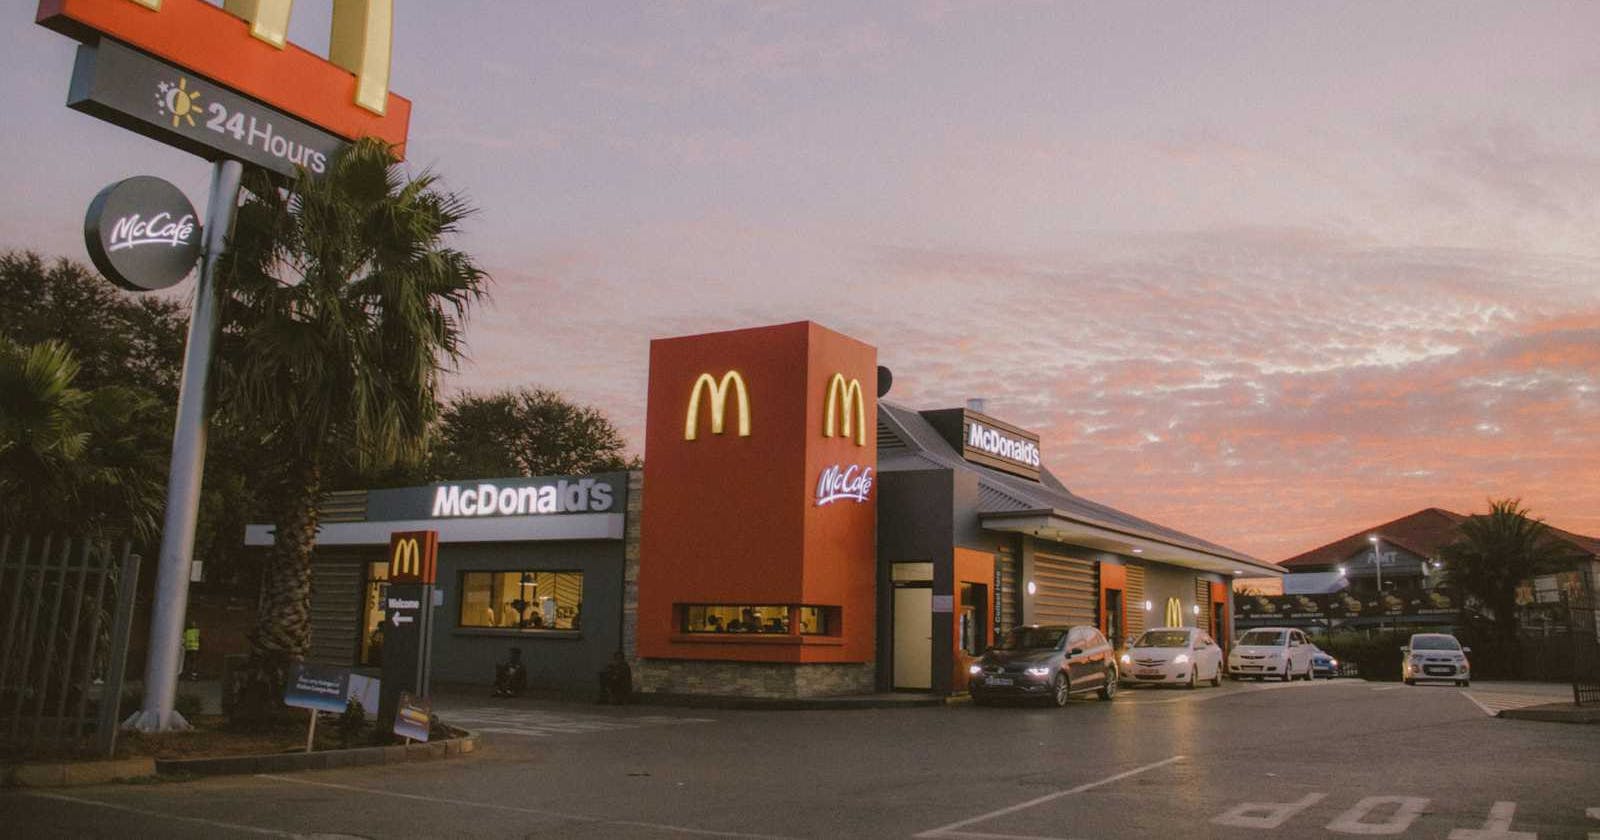 Big Mac: Data Acquisition